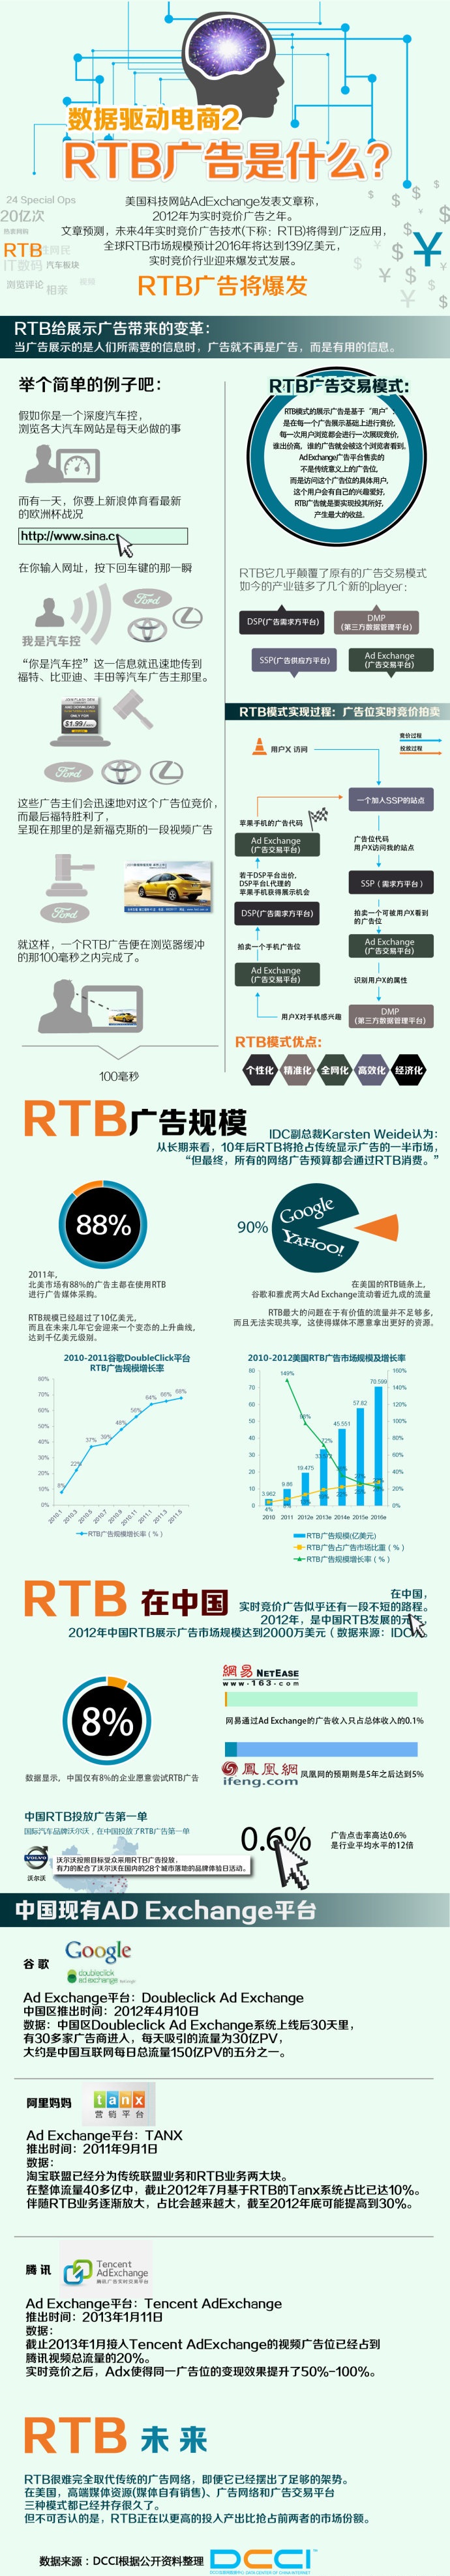 rtb广告发展及模式介绍